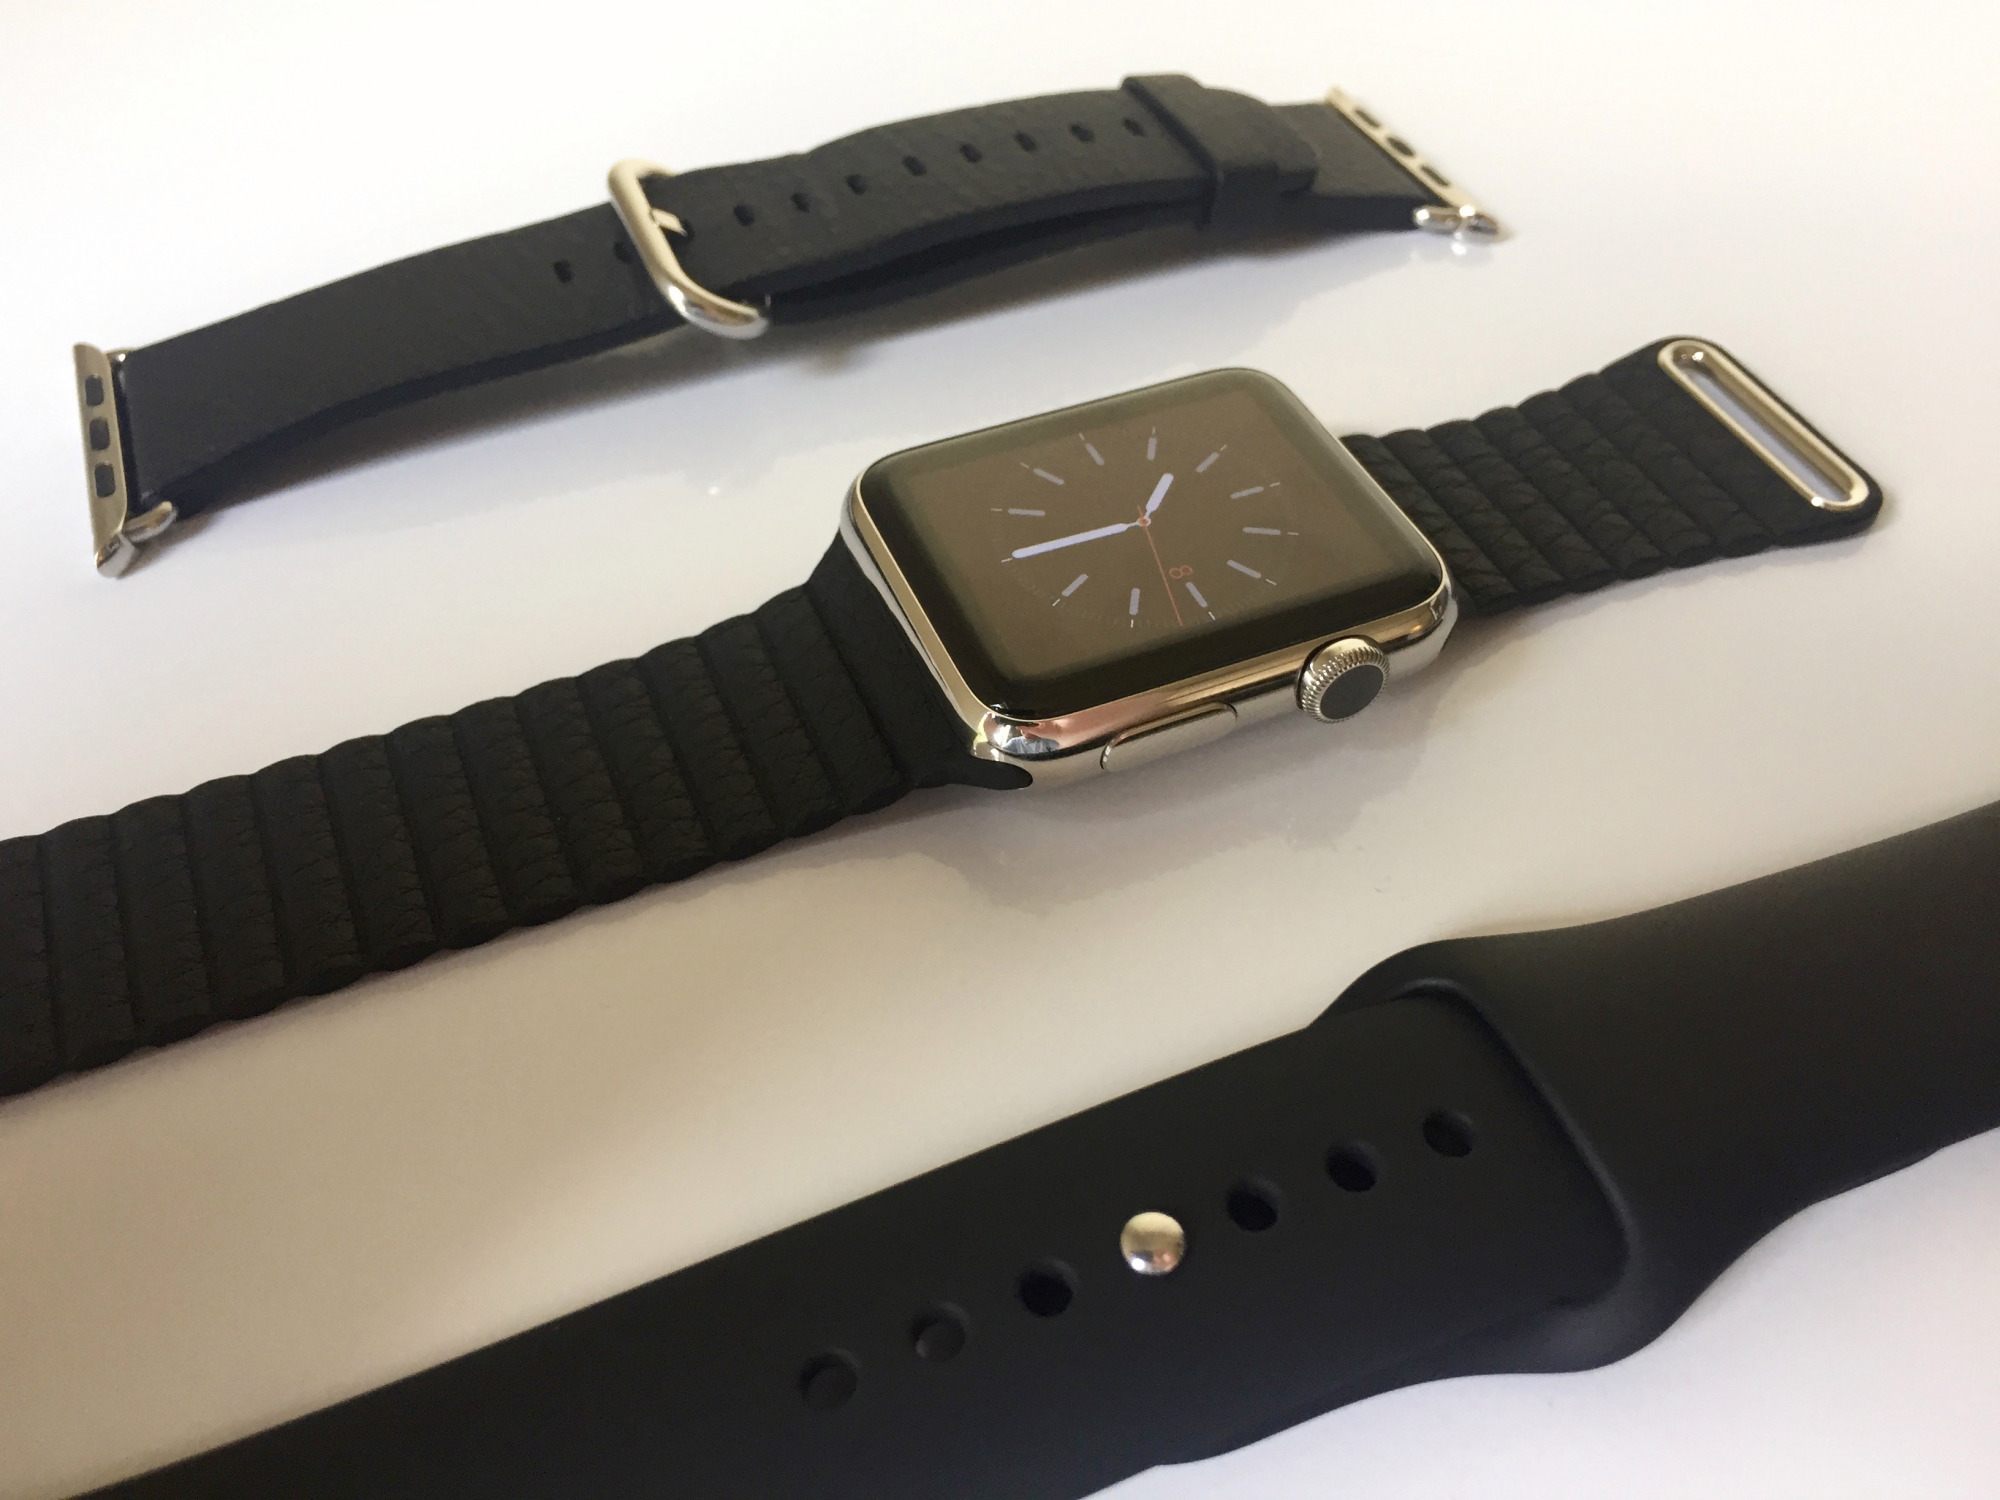 Image via Zac Hall's Apple Watch review